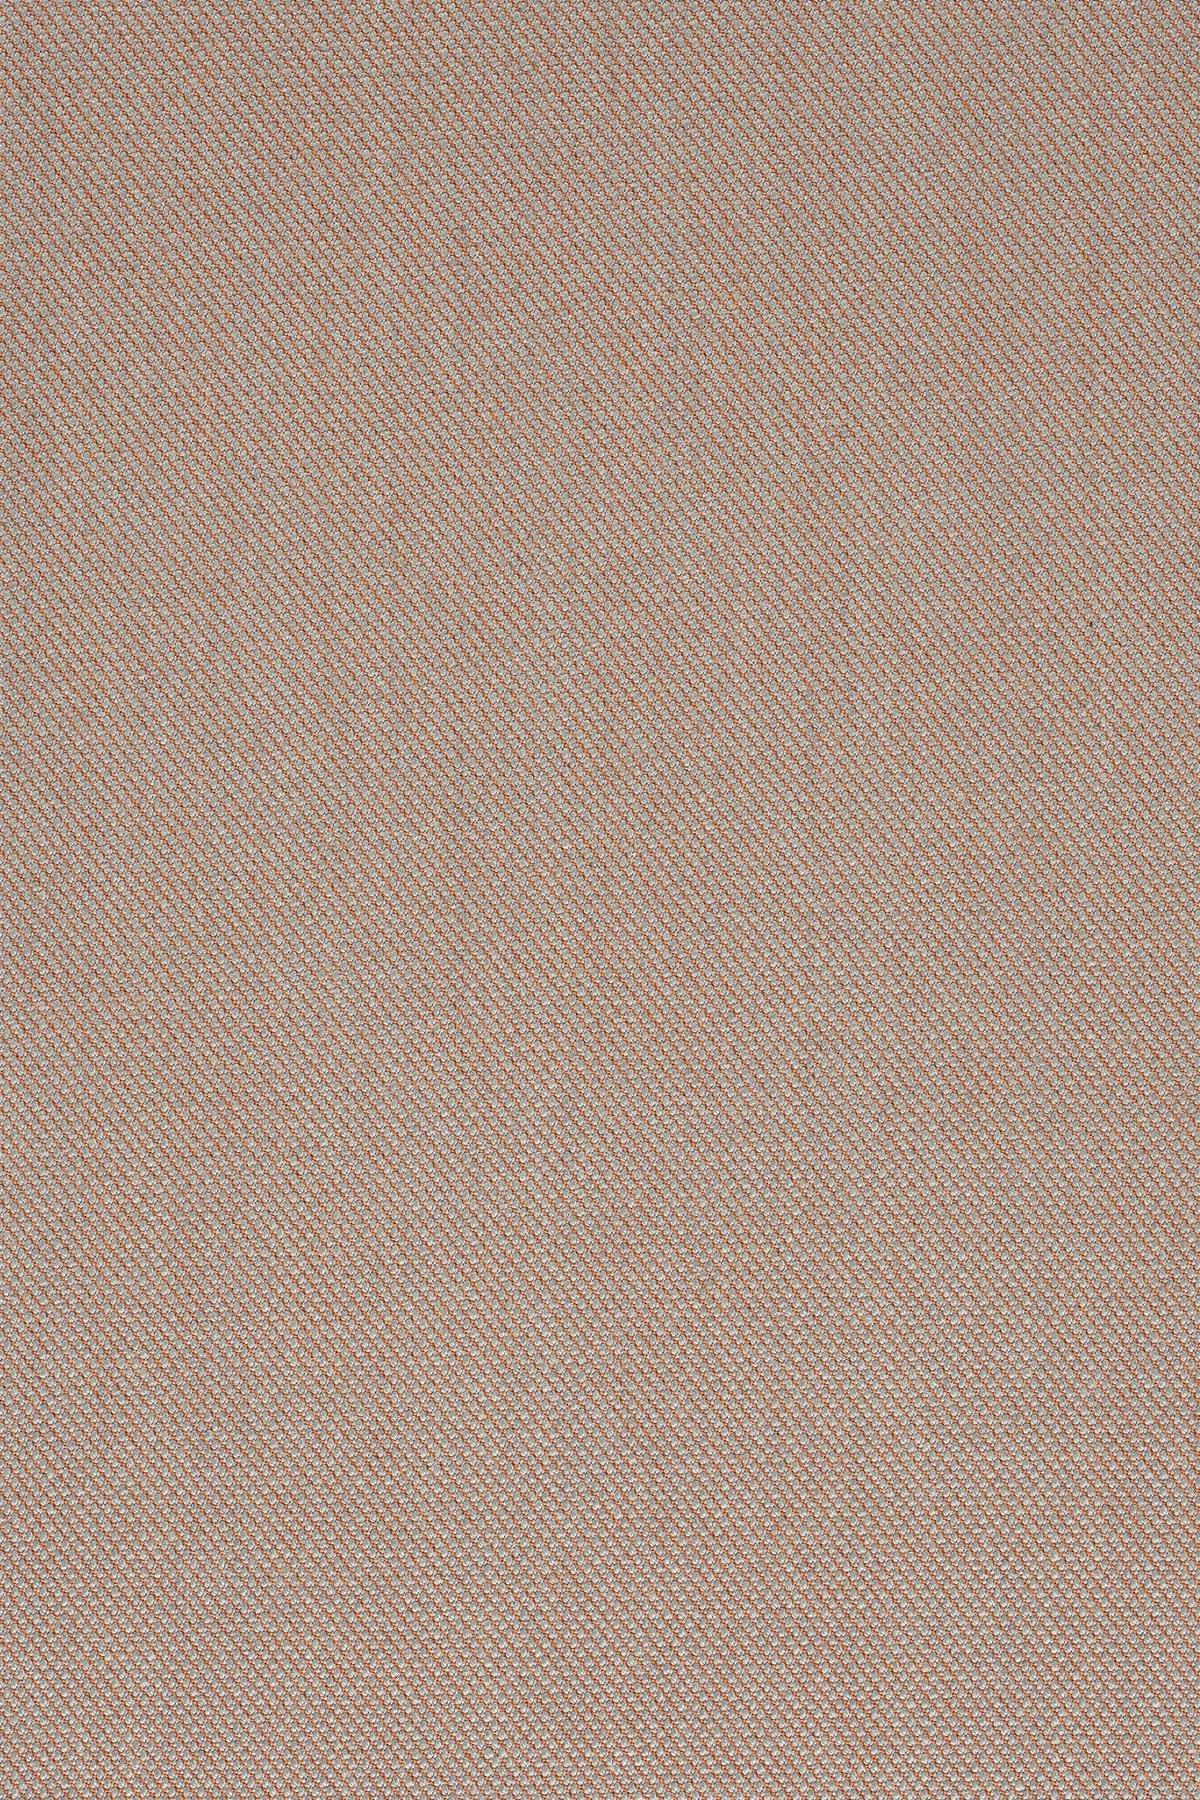 Fabric sample Steelcut Trio 3 426 pink